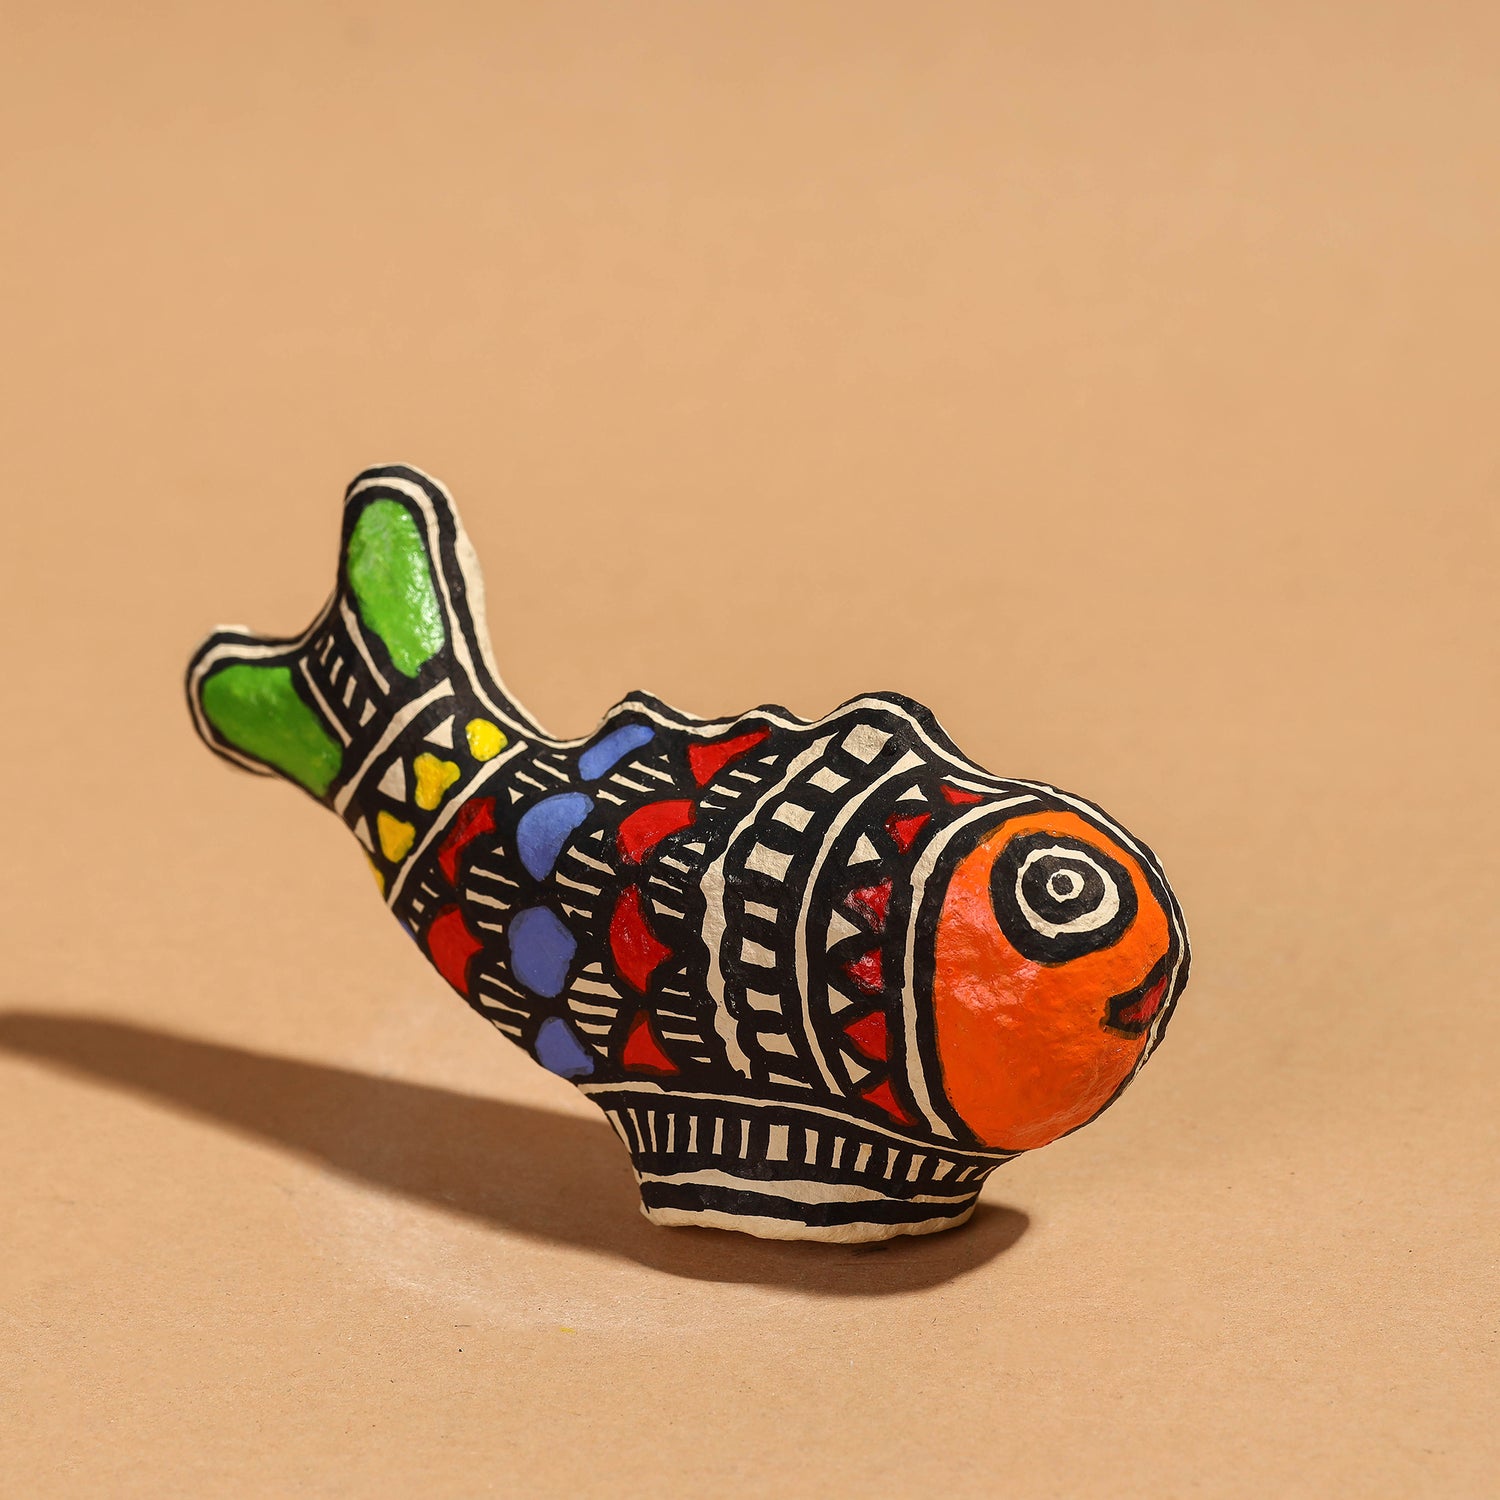 Paper Mache Ideas: Fish Ornaments